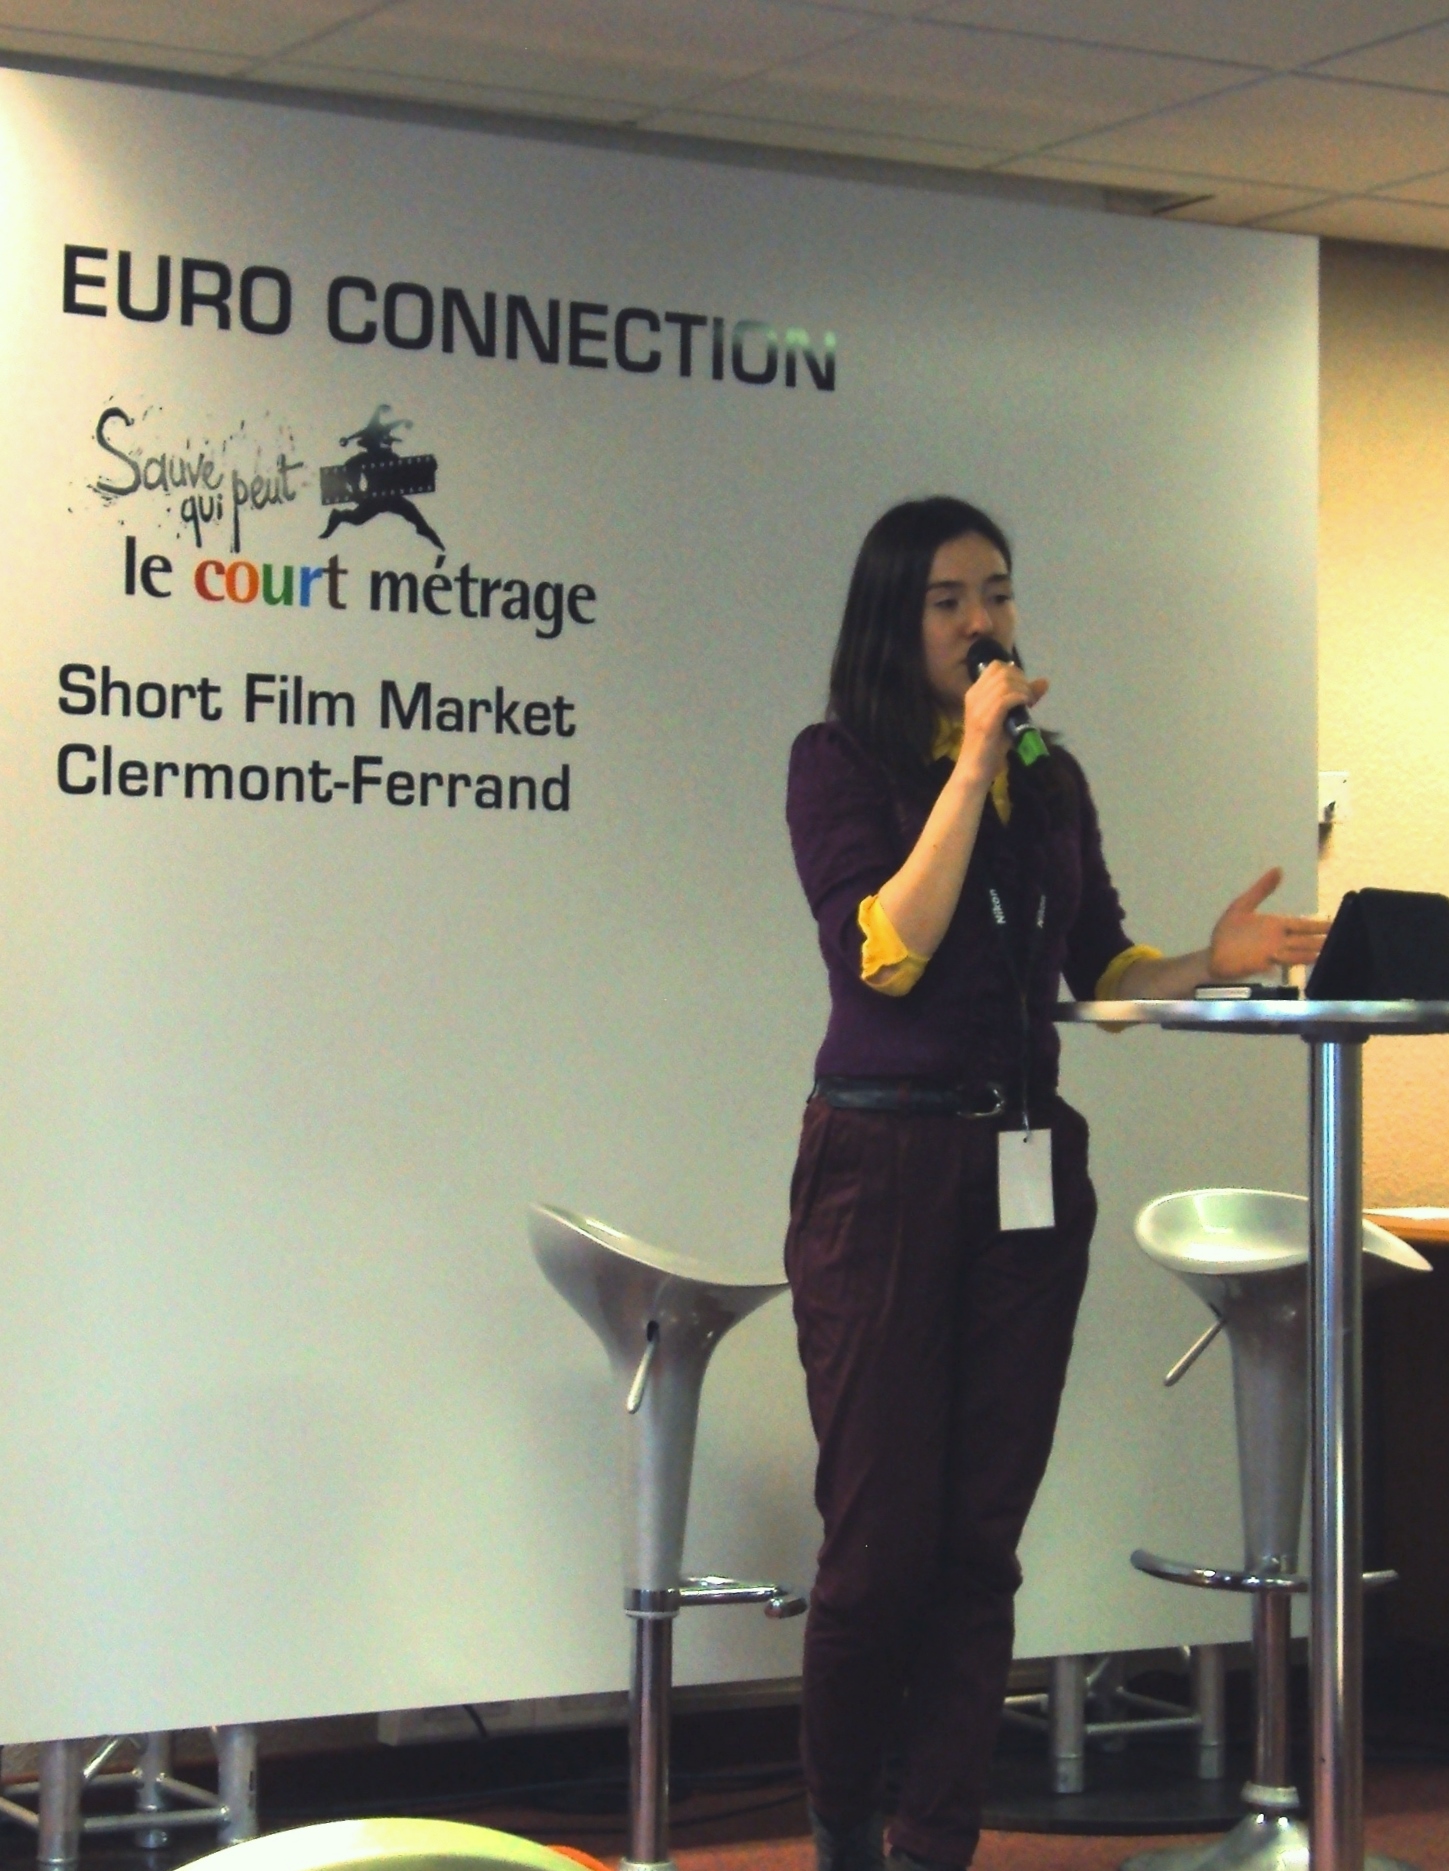 Gabi Suciu presenting Mr. Moonlight @ Euro Connection Short Film Market during Clermont Ferrand Film Festival